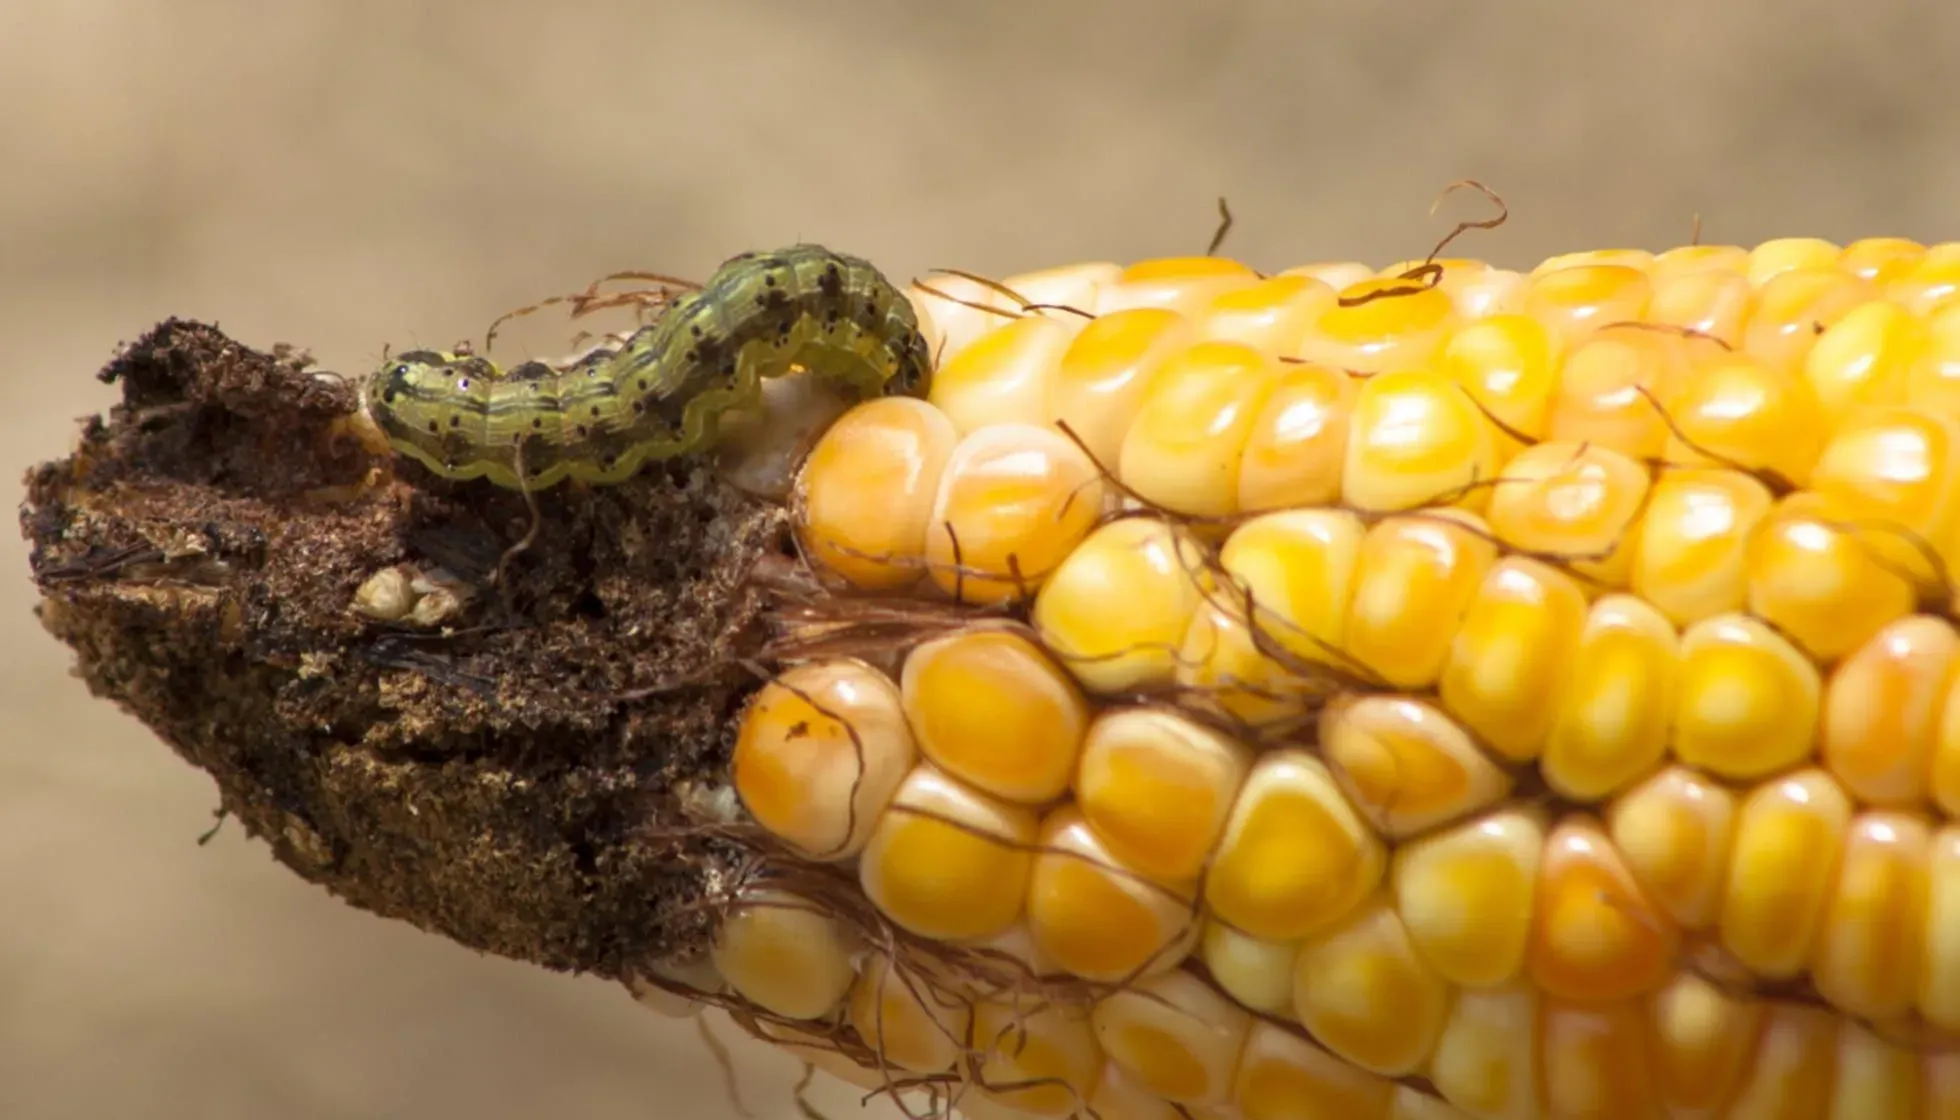 Corn Earworm